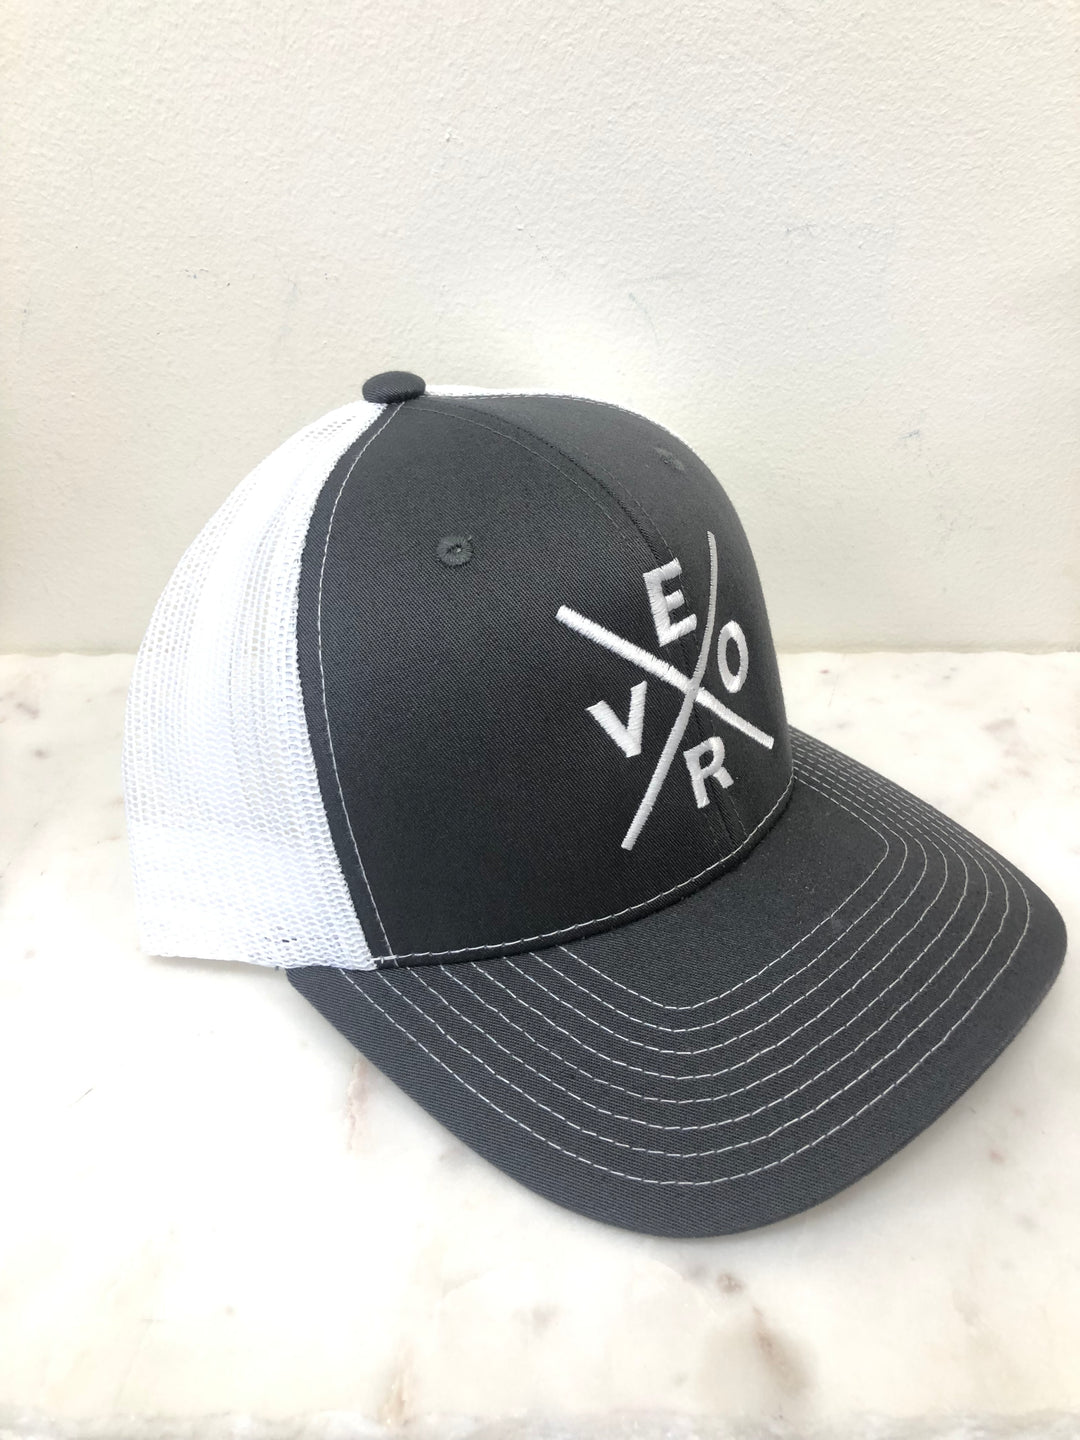 Vero Trucker Hat - Charcoal Grey & White*